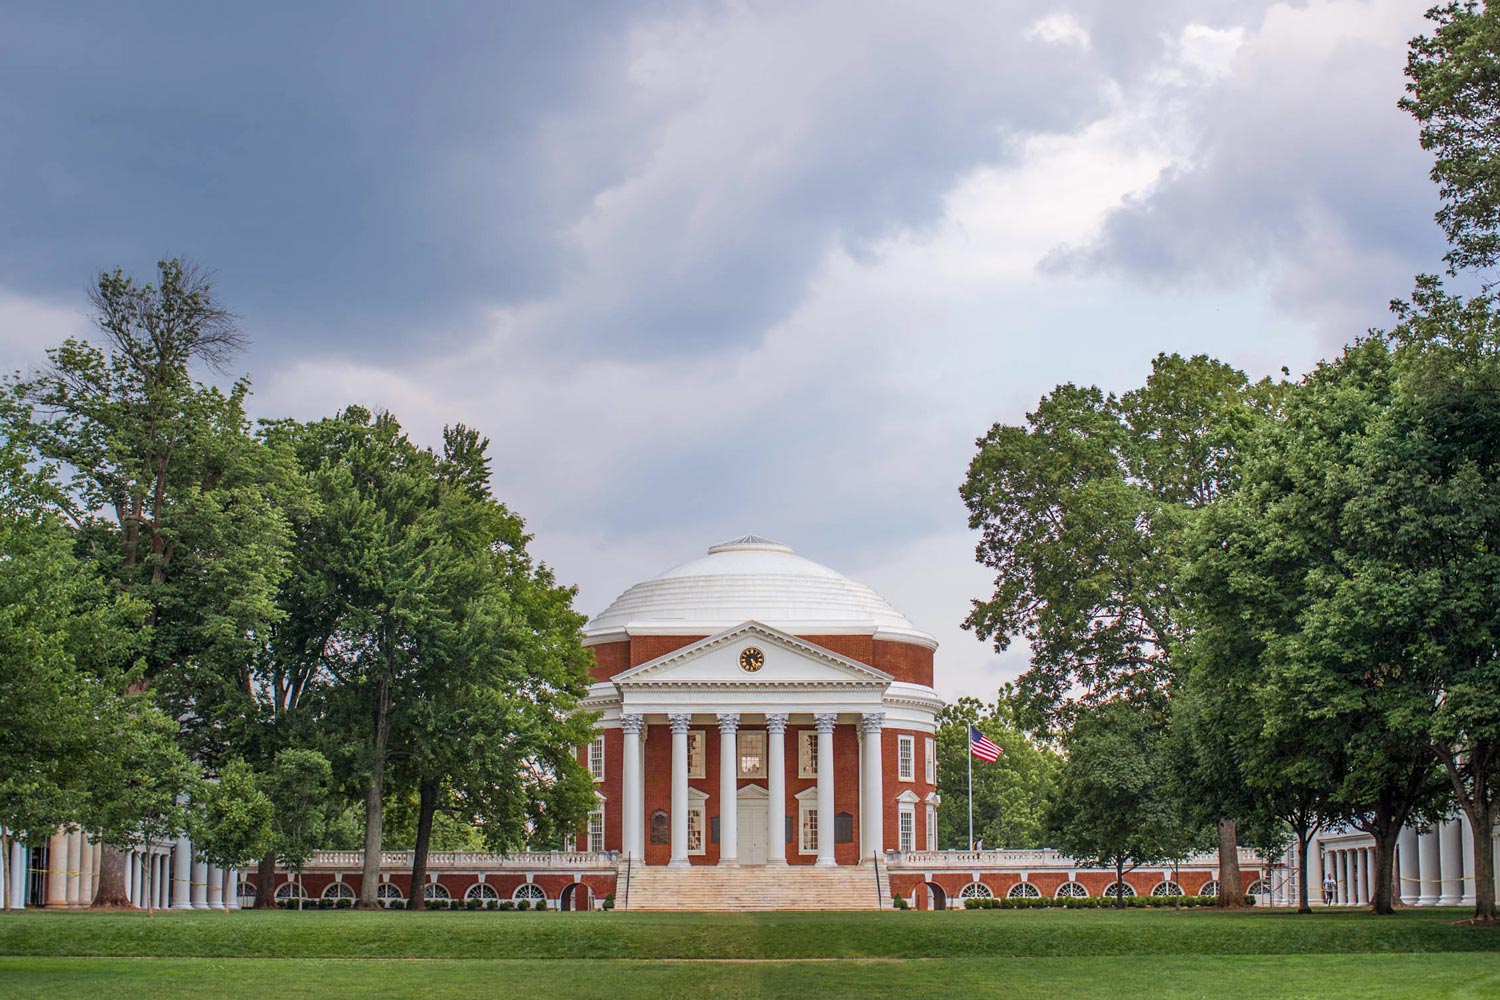 The Rotunda at the University of Virginia, on an overcast day